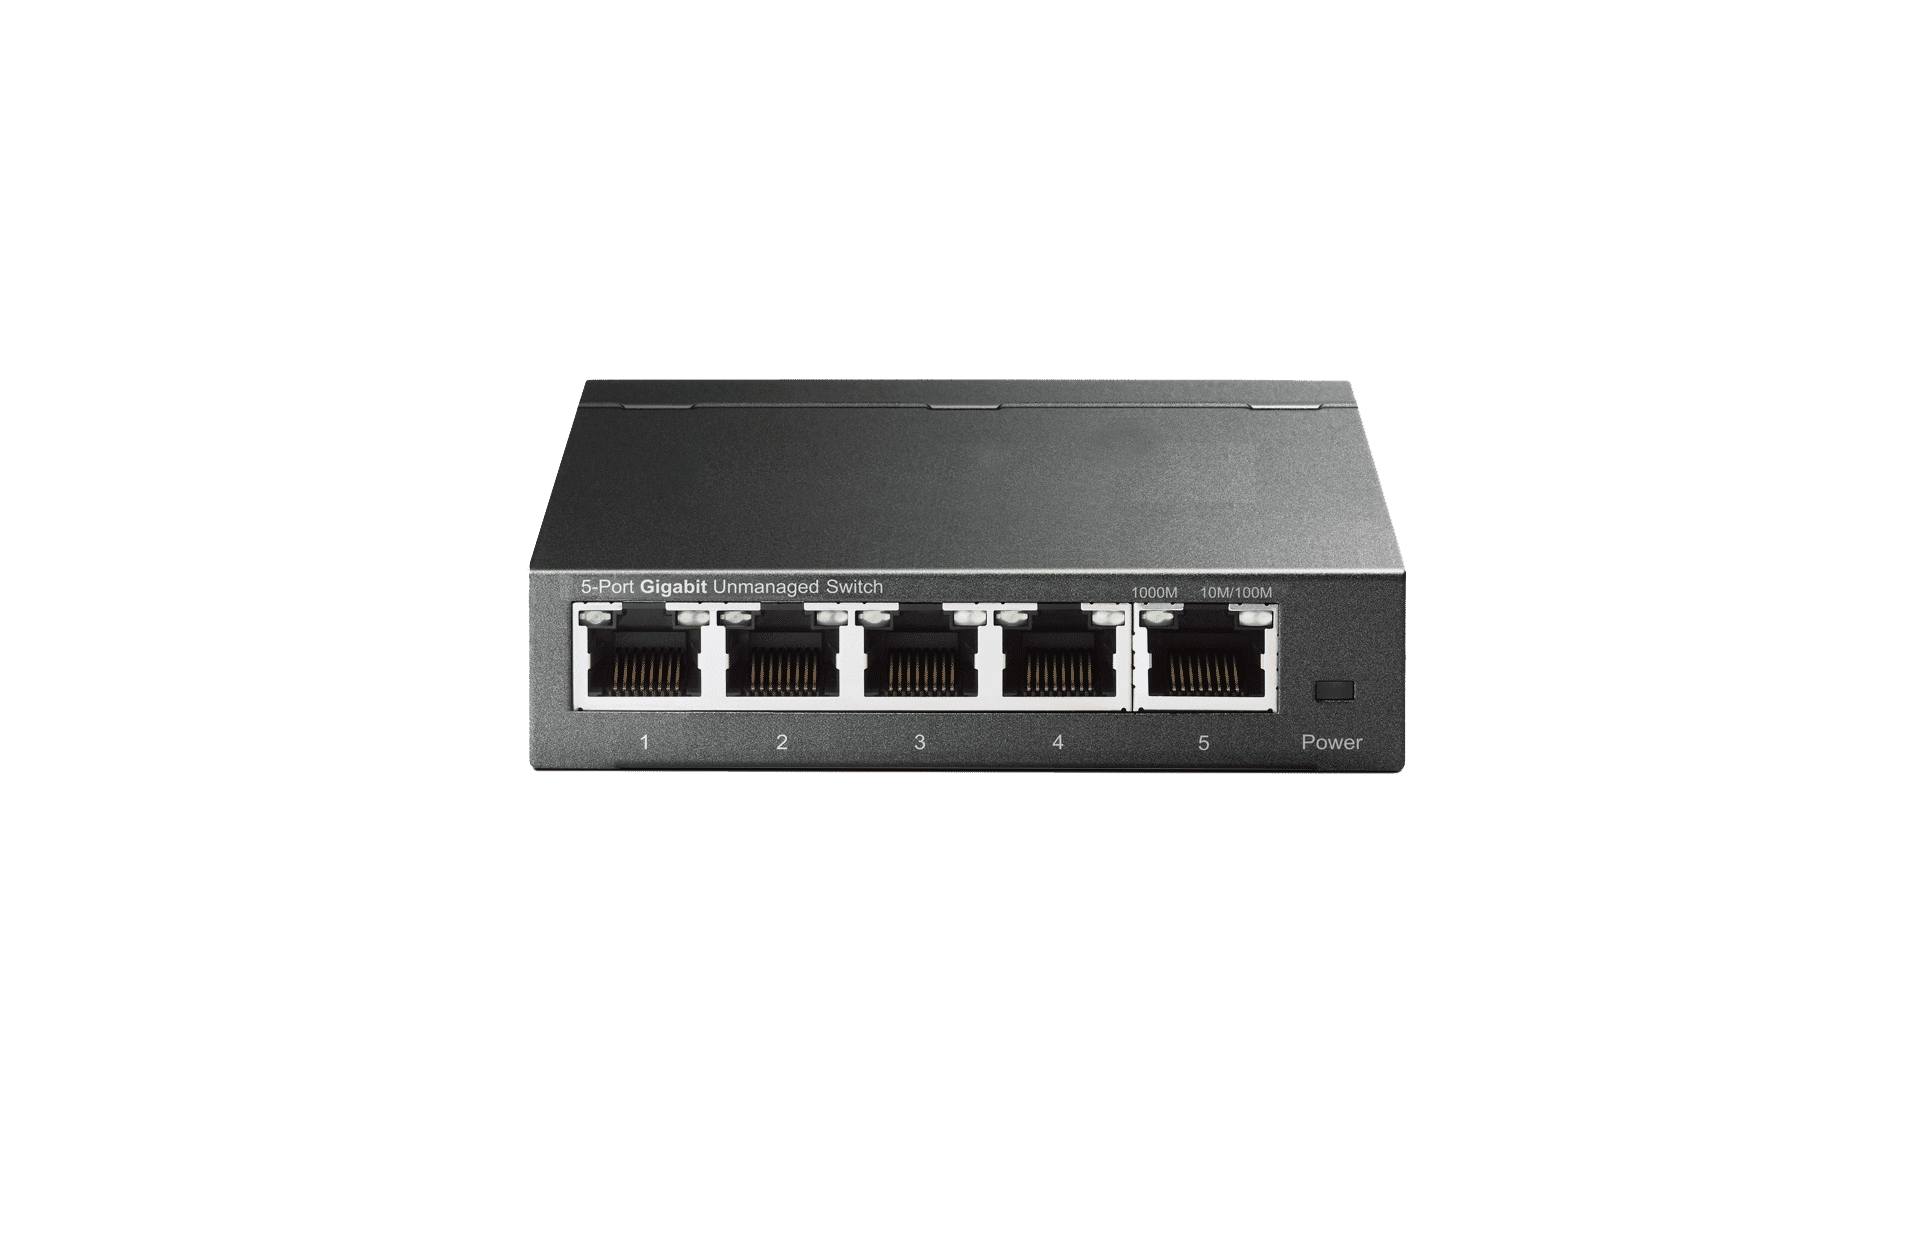 5 Ports 10/100/1000Mbps Ethernet Switch